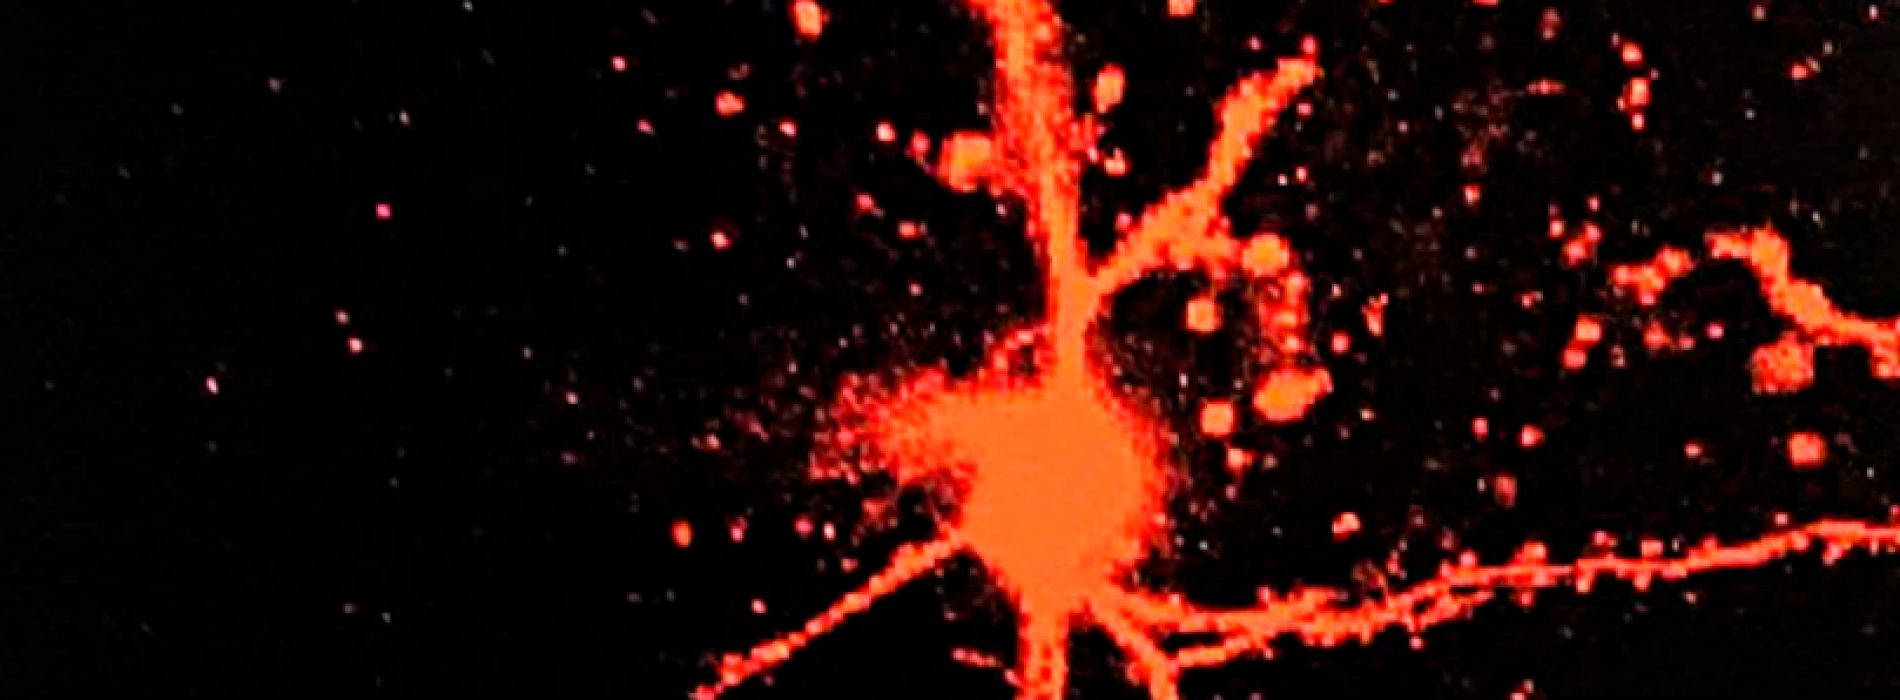 Asombrosa image de un grupo de neuronas haciendo sinapsis